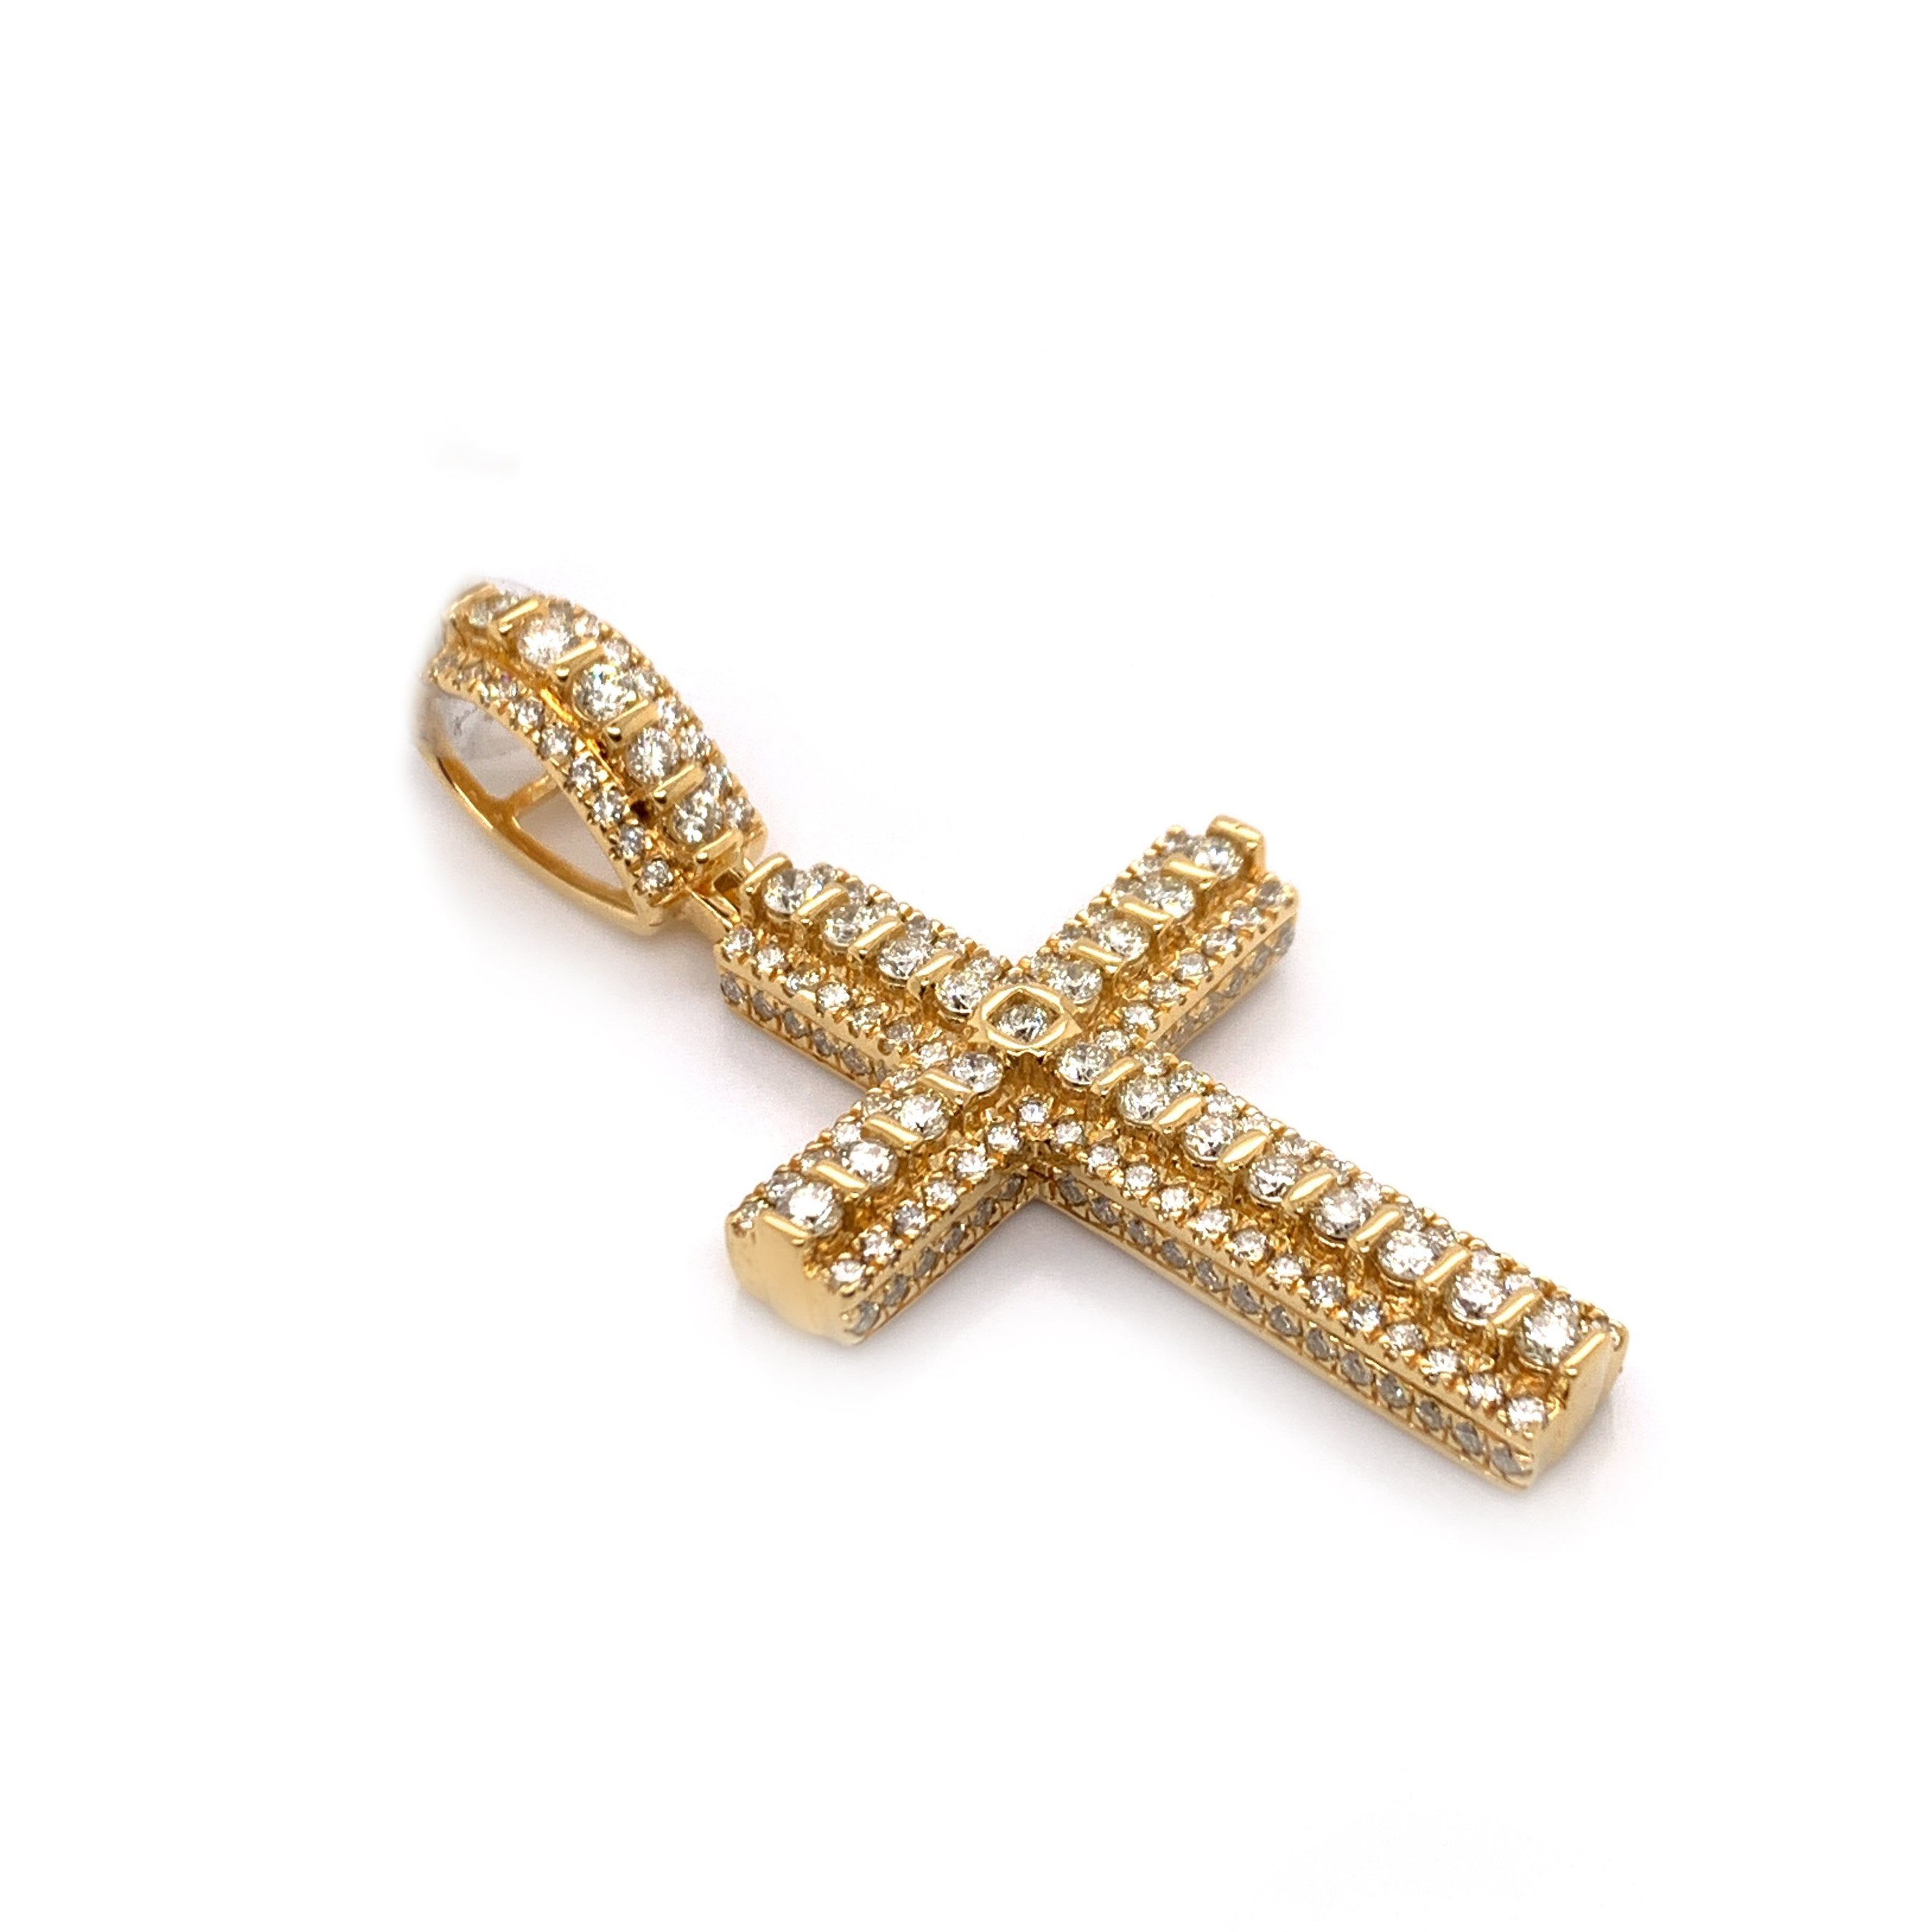 2.24 CT. Diamond Yellow Gold Cross Pendant - White Carat - USA & Canada